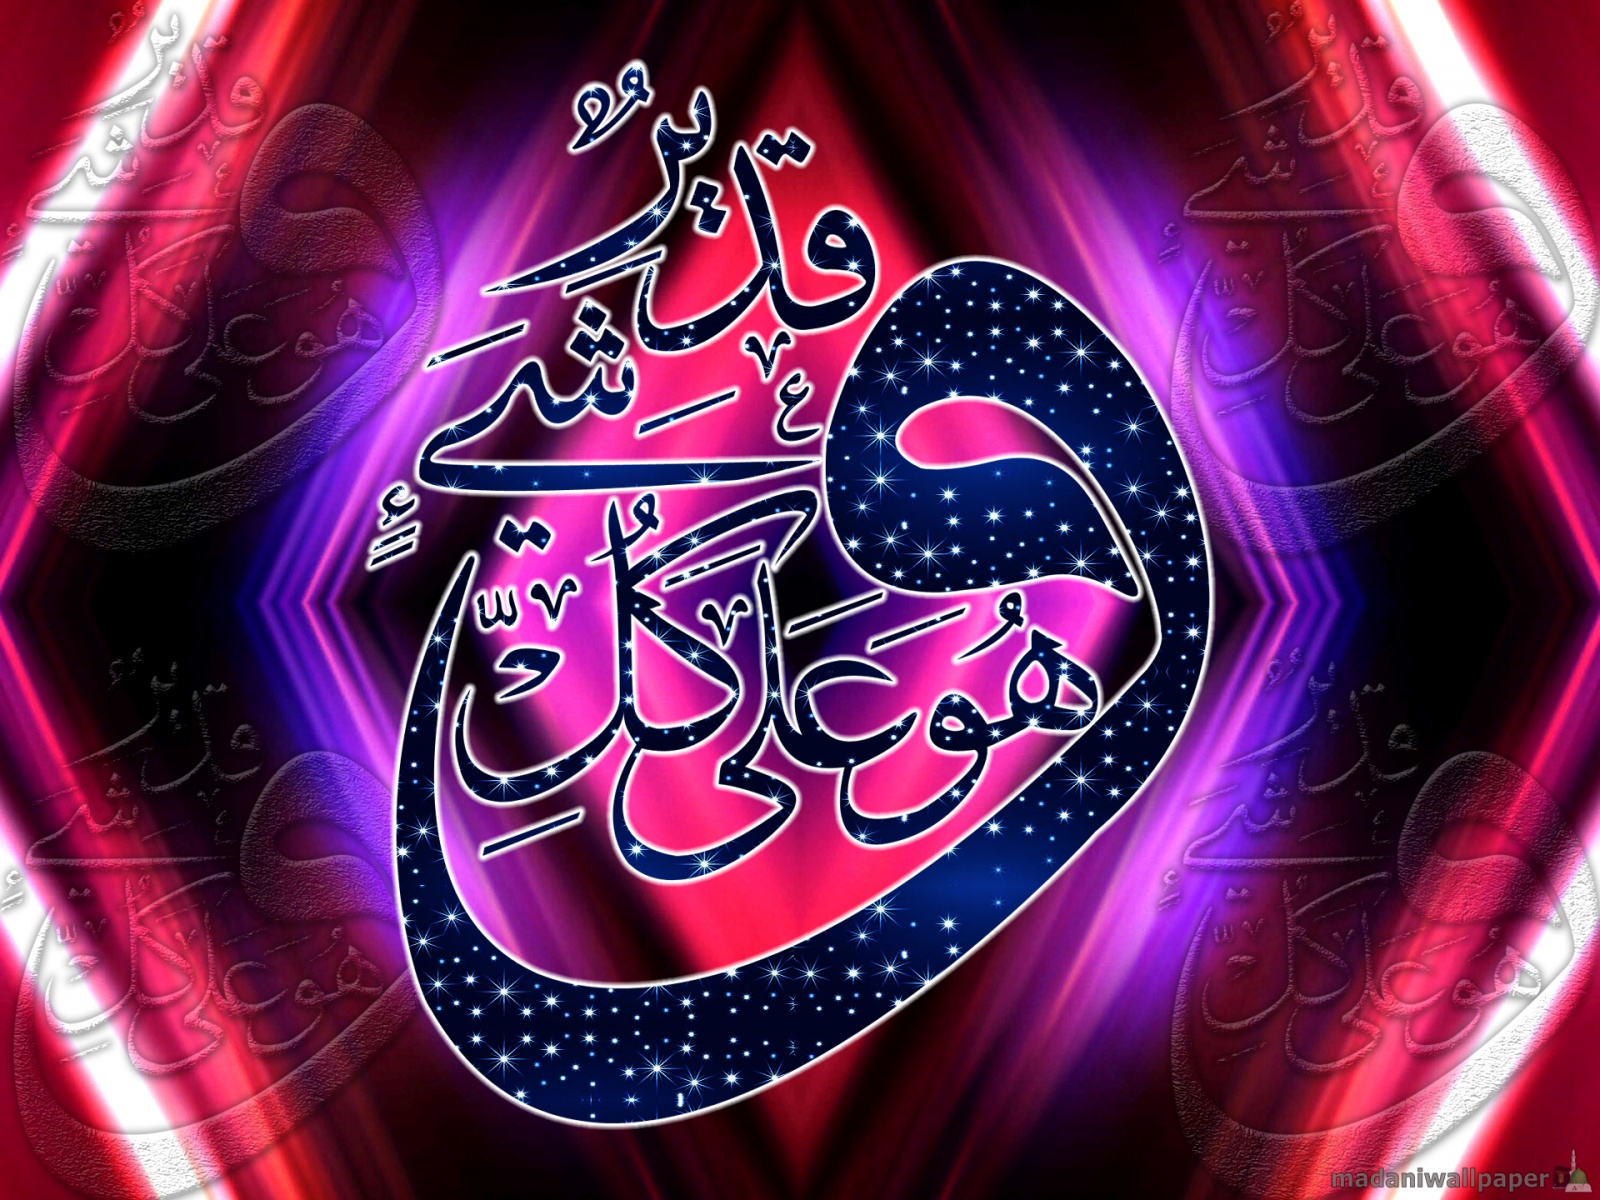  Islamic Calligraphy Latest Wallpaper 2013 wallpaper on your desktop